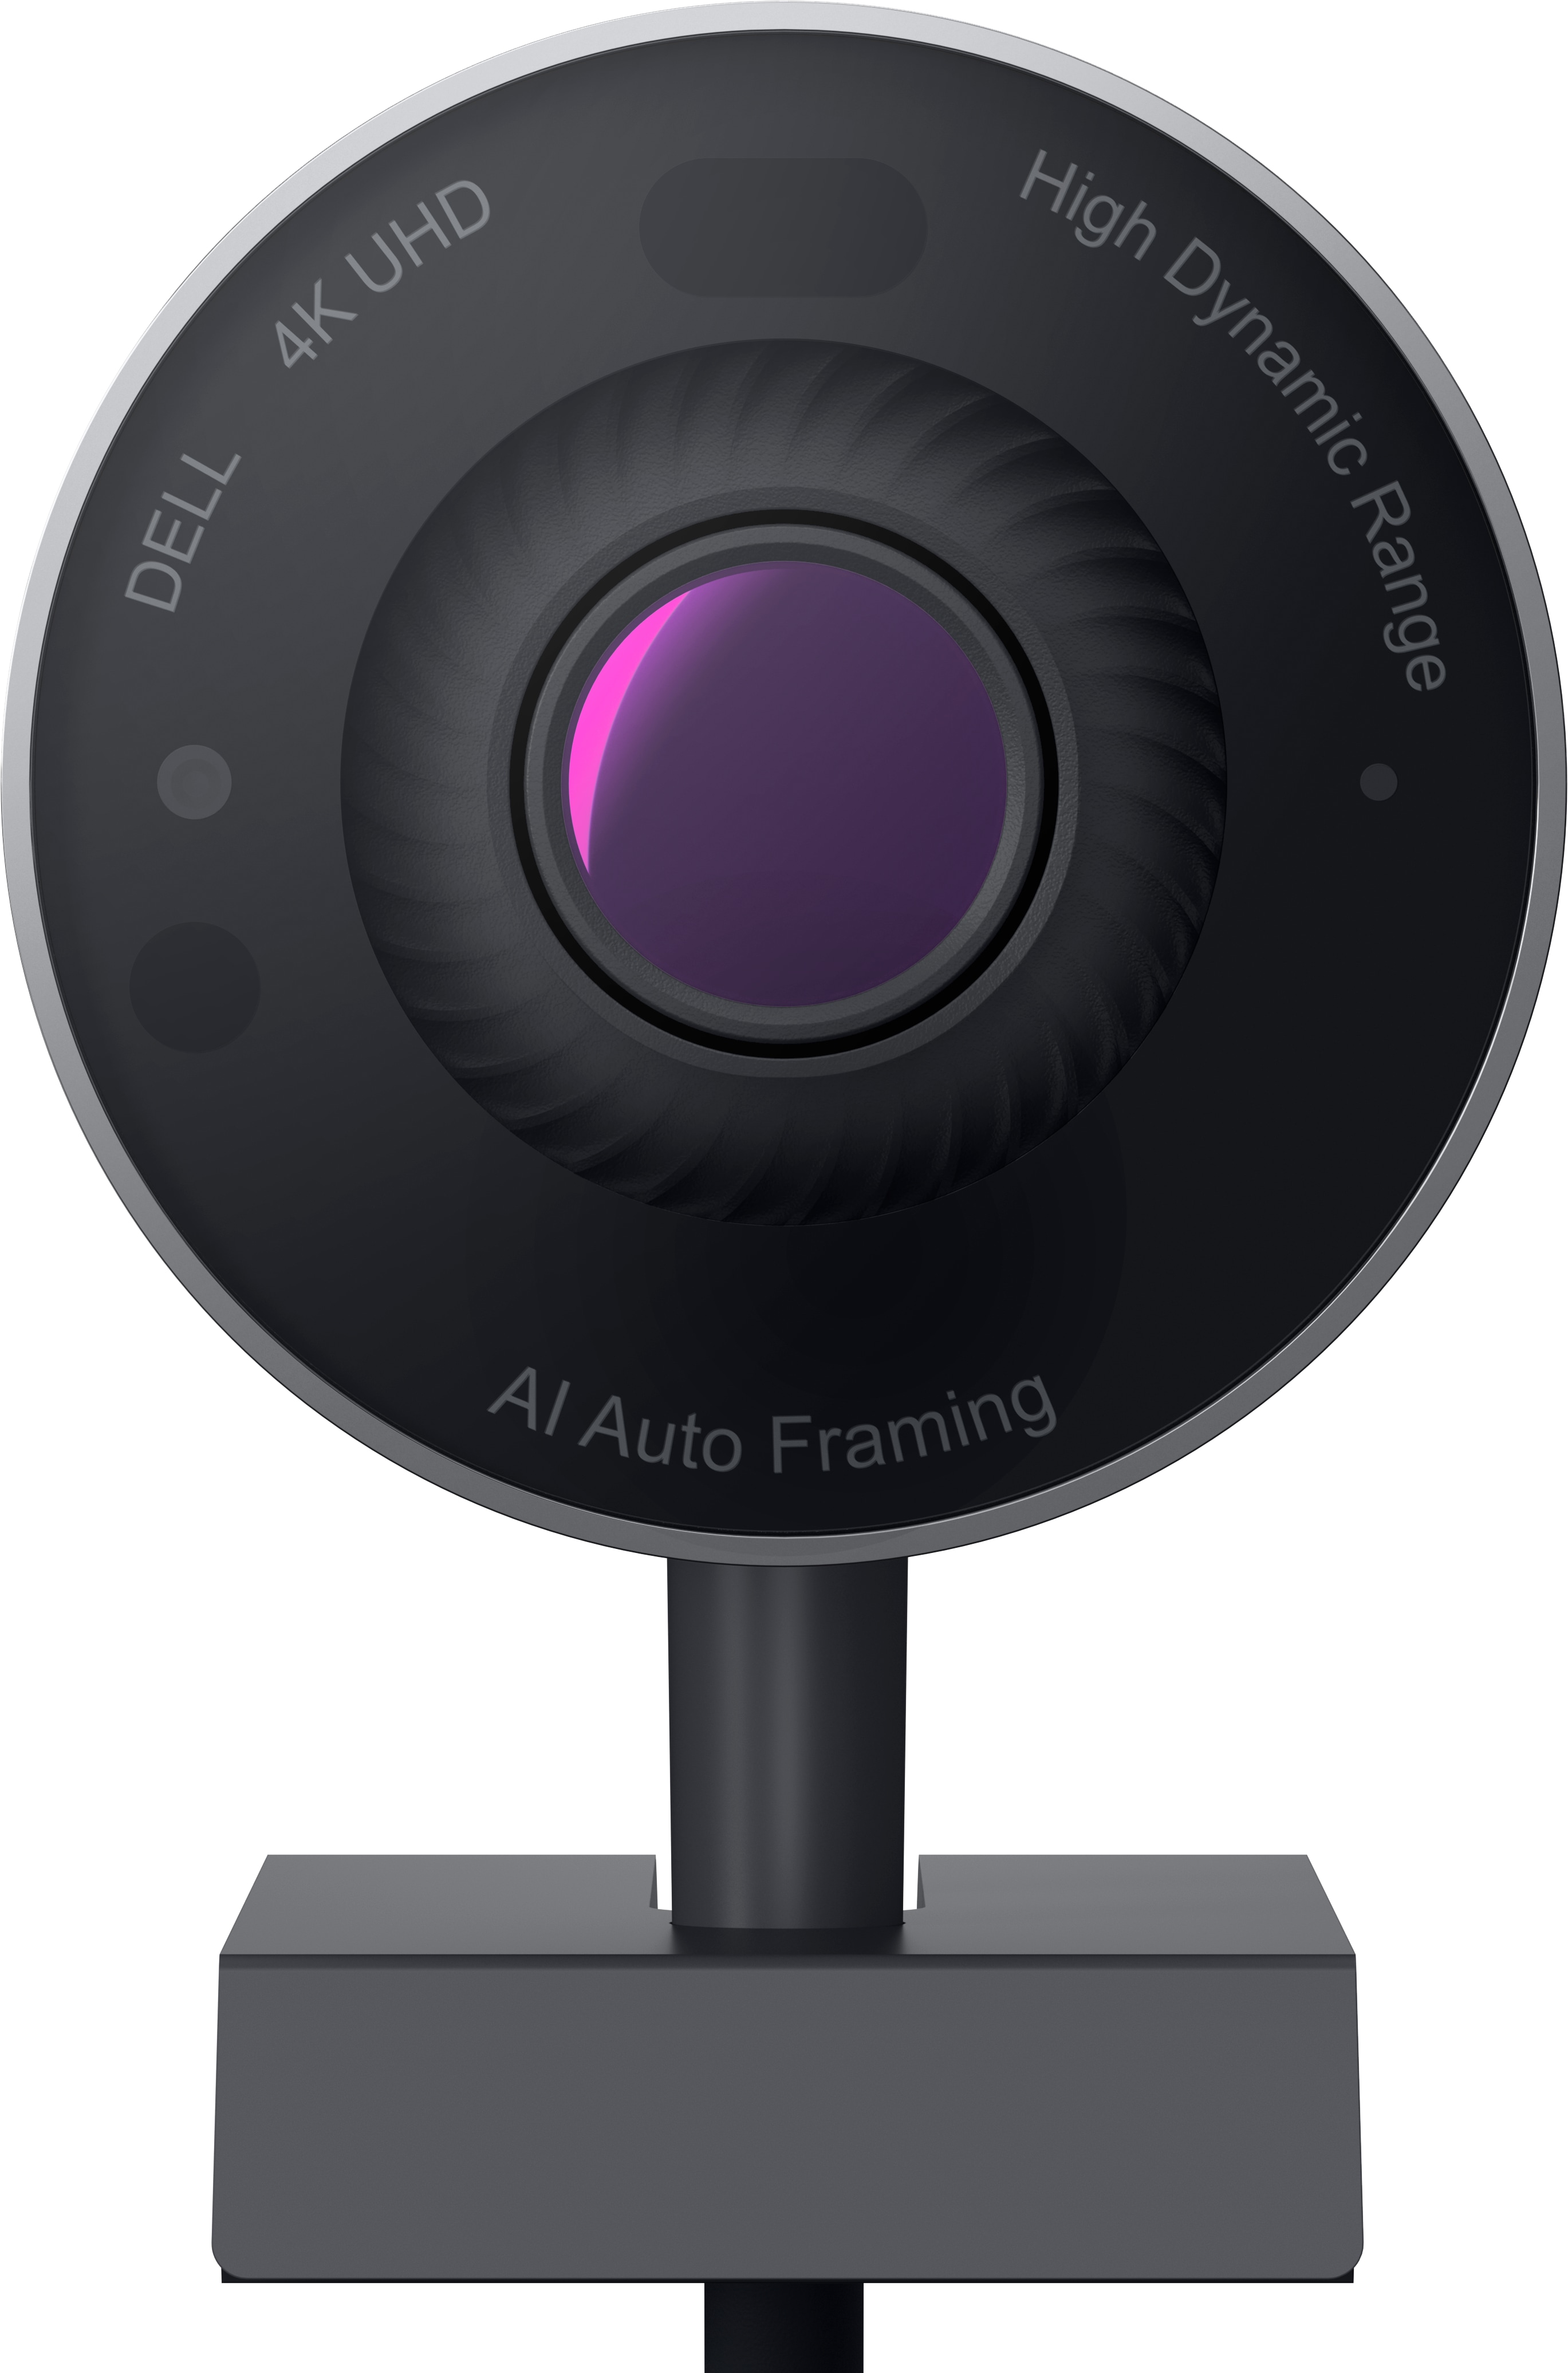 dell integrated webcam driver windows 10 64bit